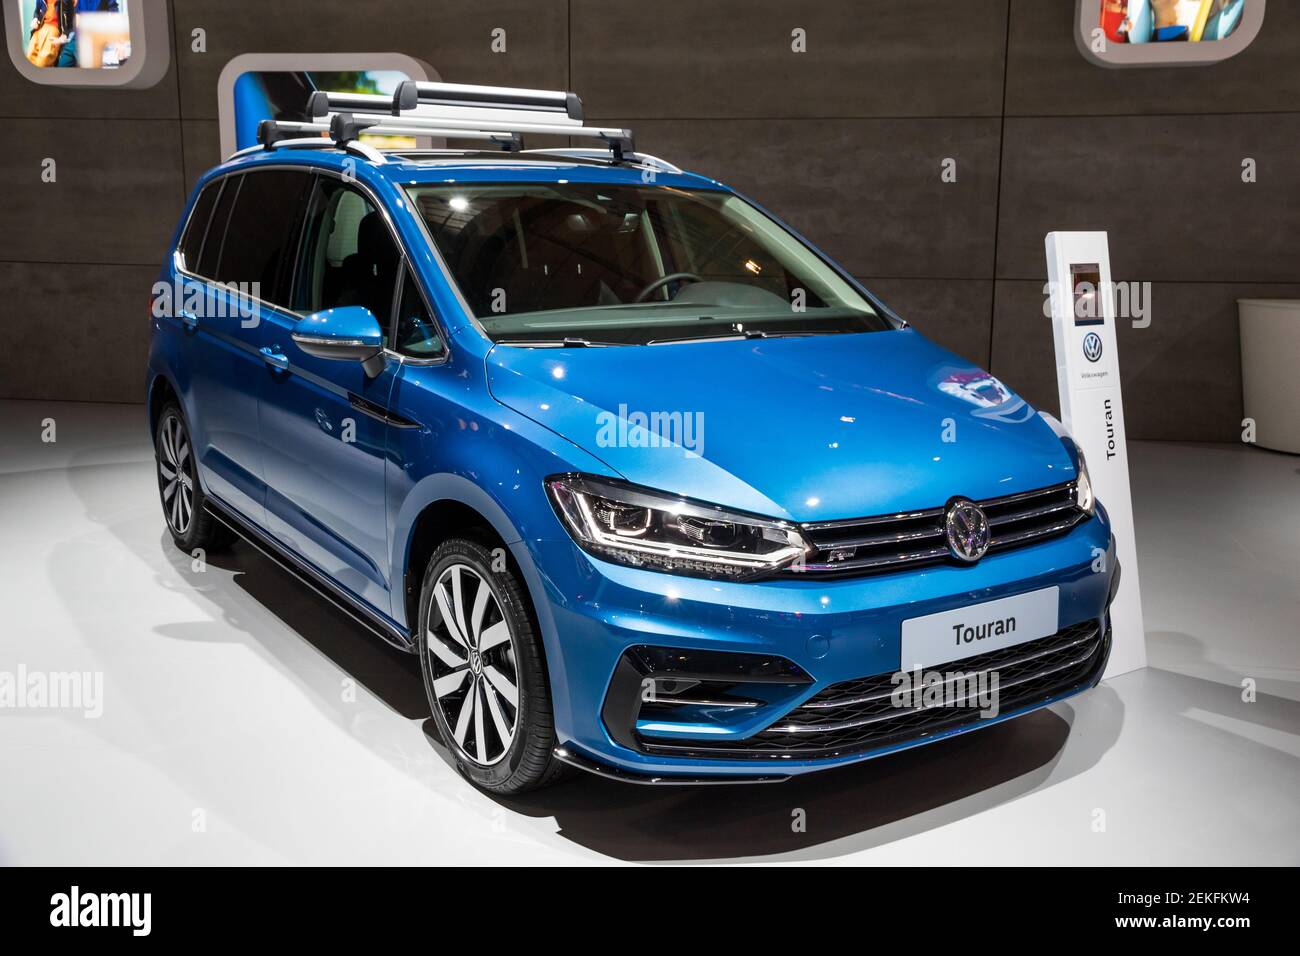 Volkswagen Touran car showcased at the Brussels Autosalon Motor Show. Belgium - January 18, 2019. Stock Photo